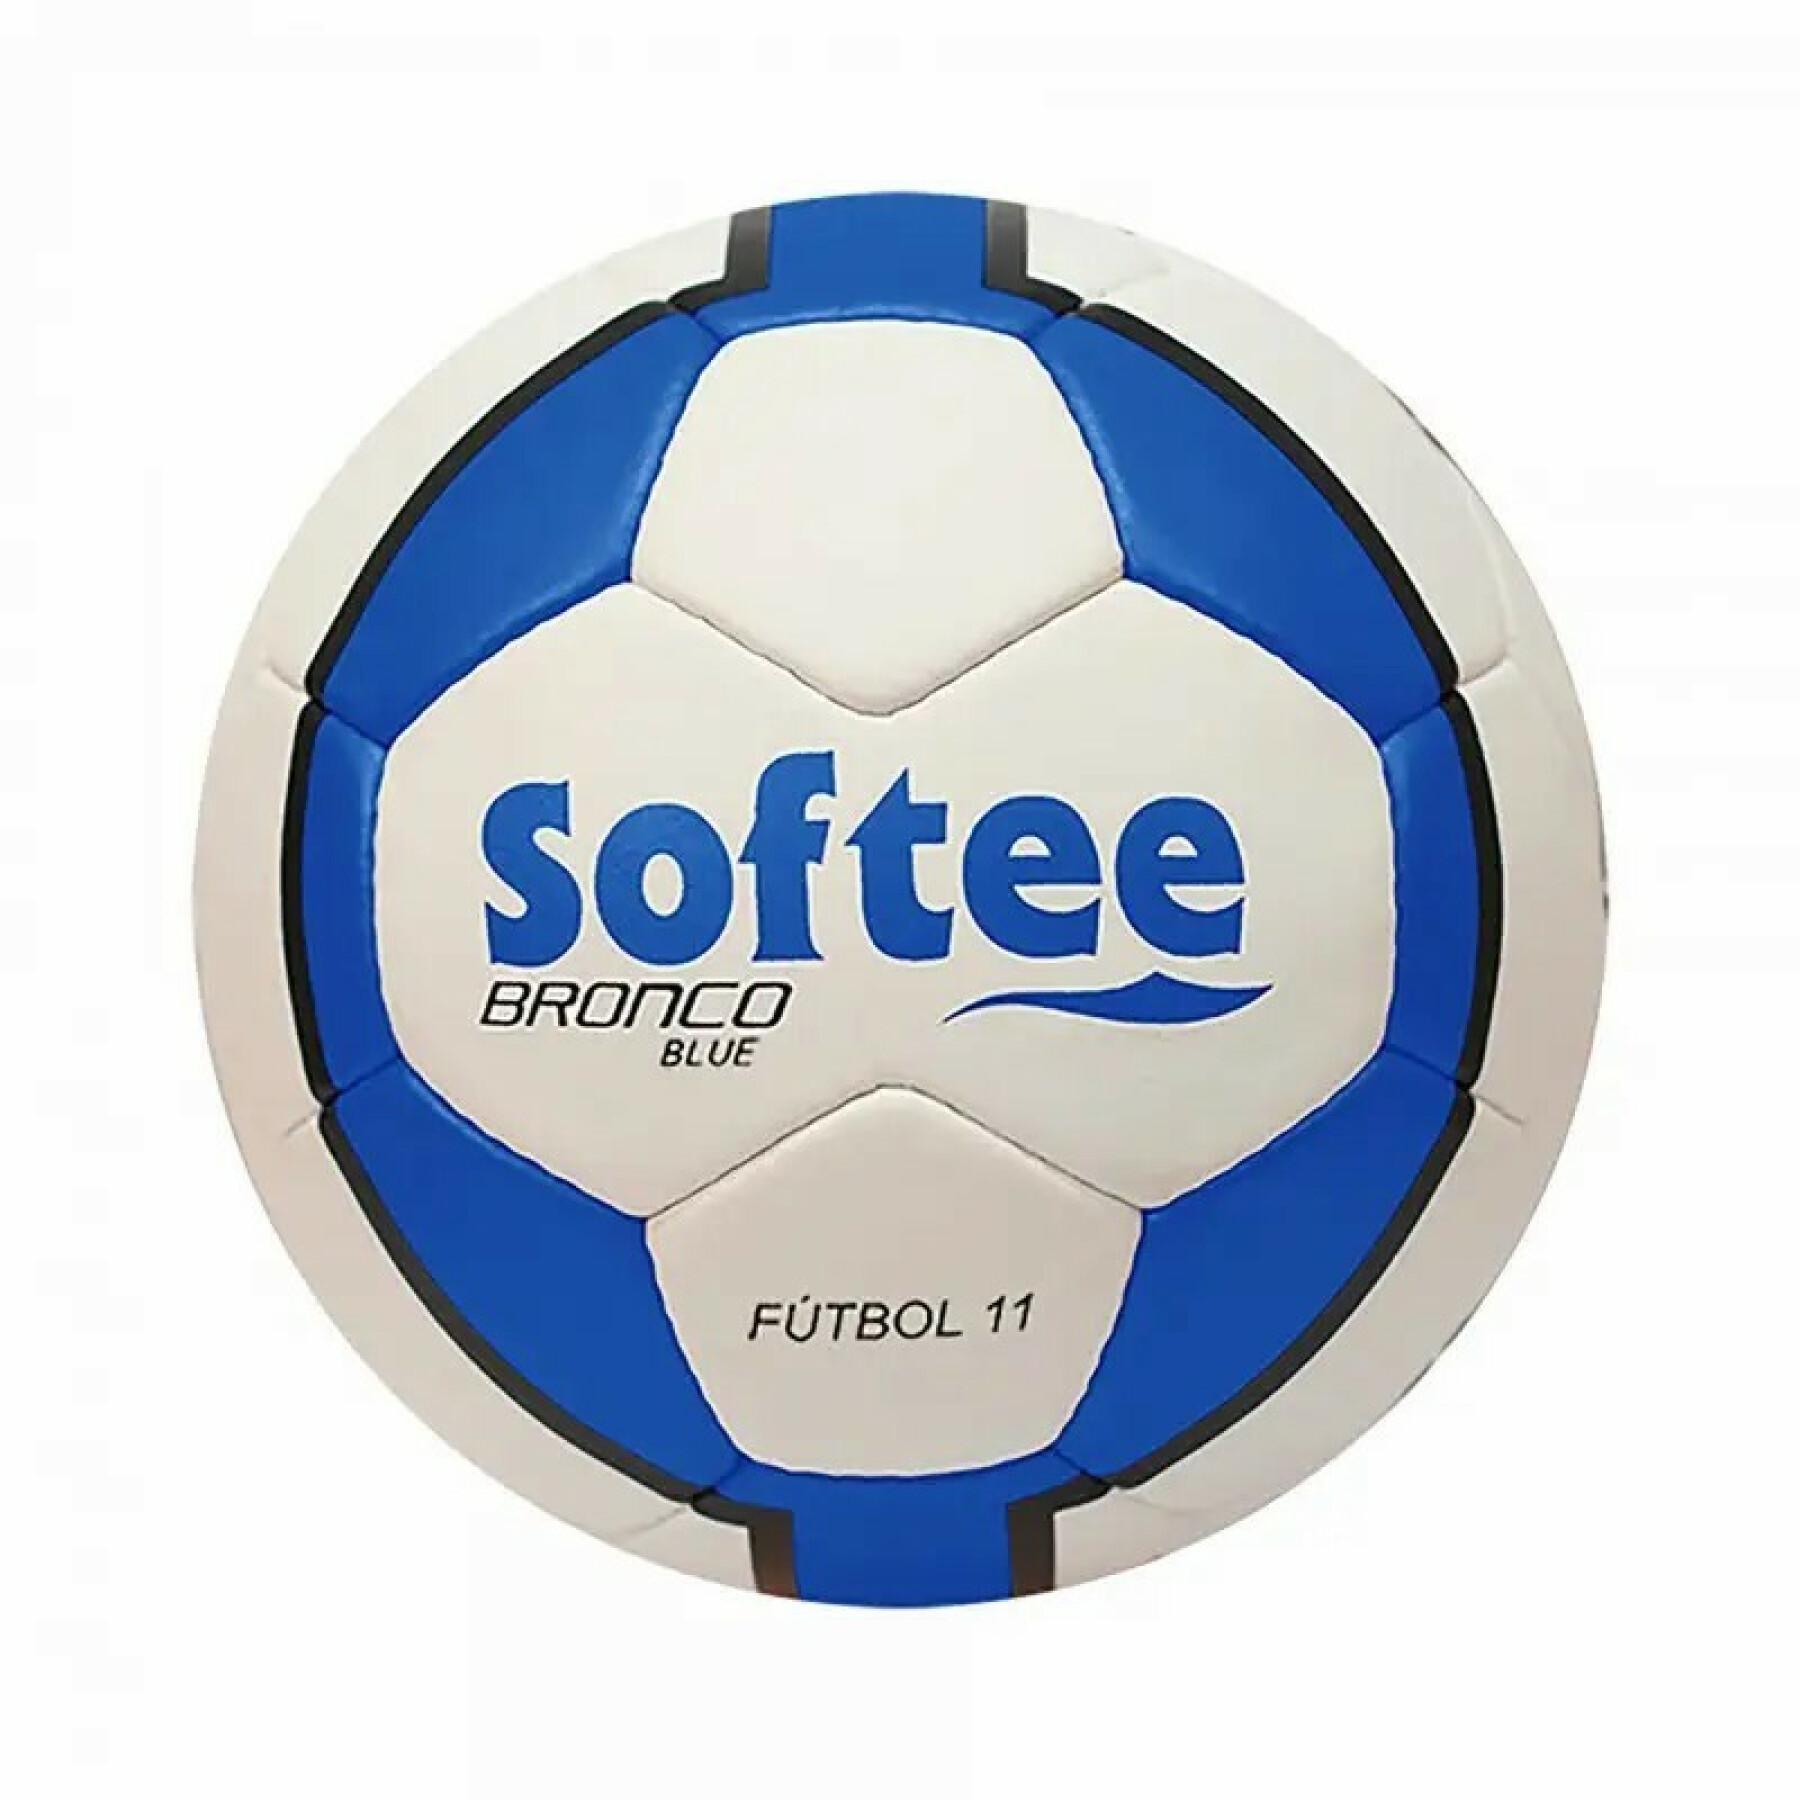 Piłka nożna Softee Bronco FUTBOL11